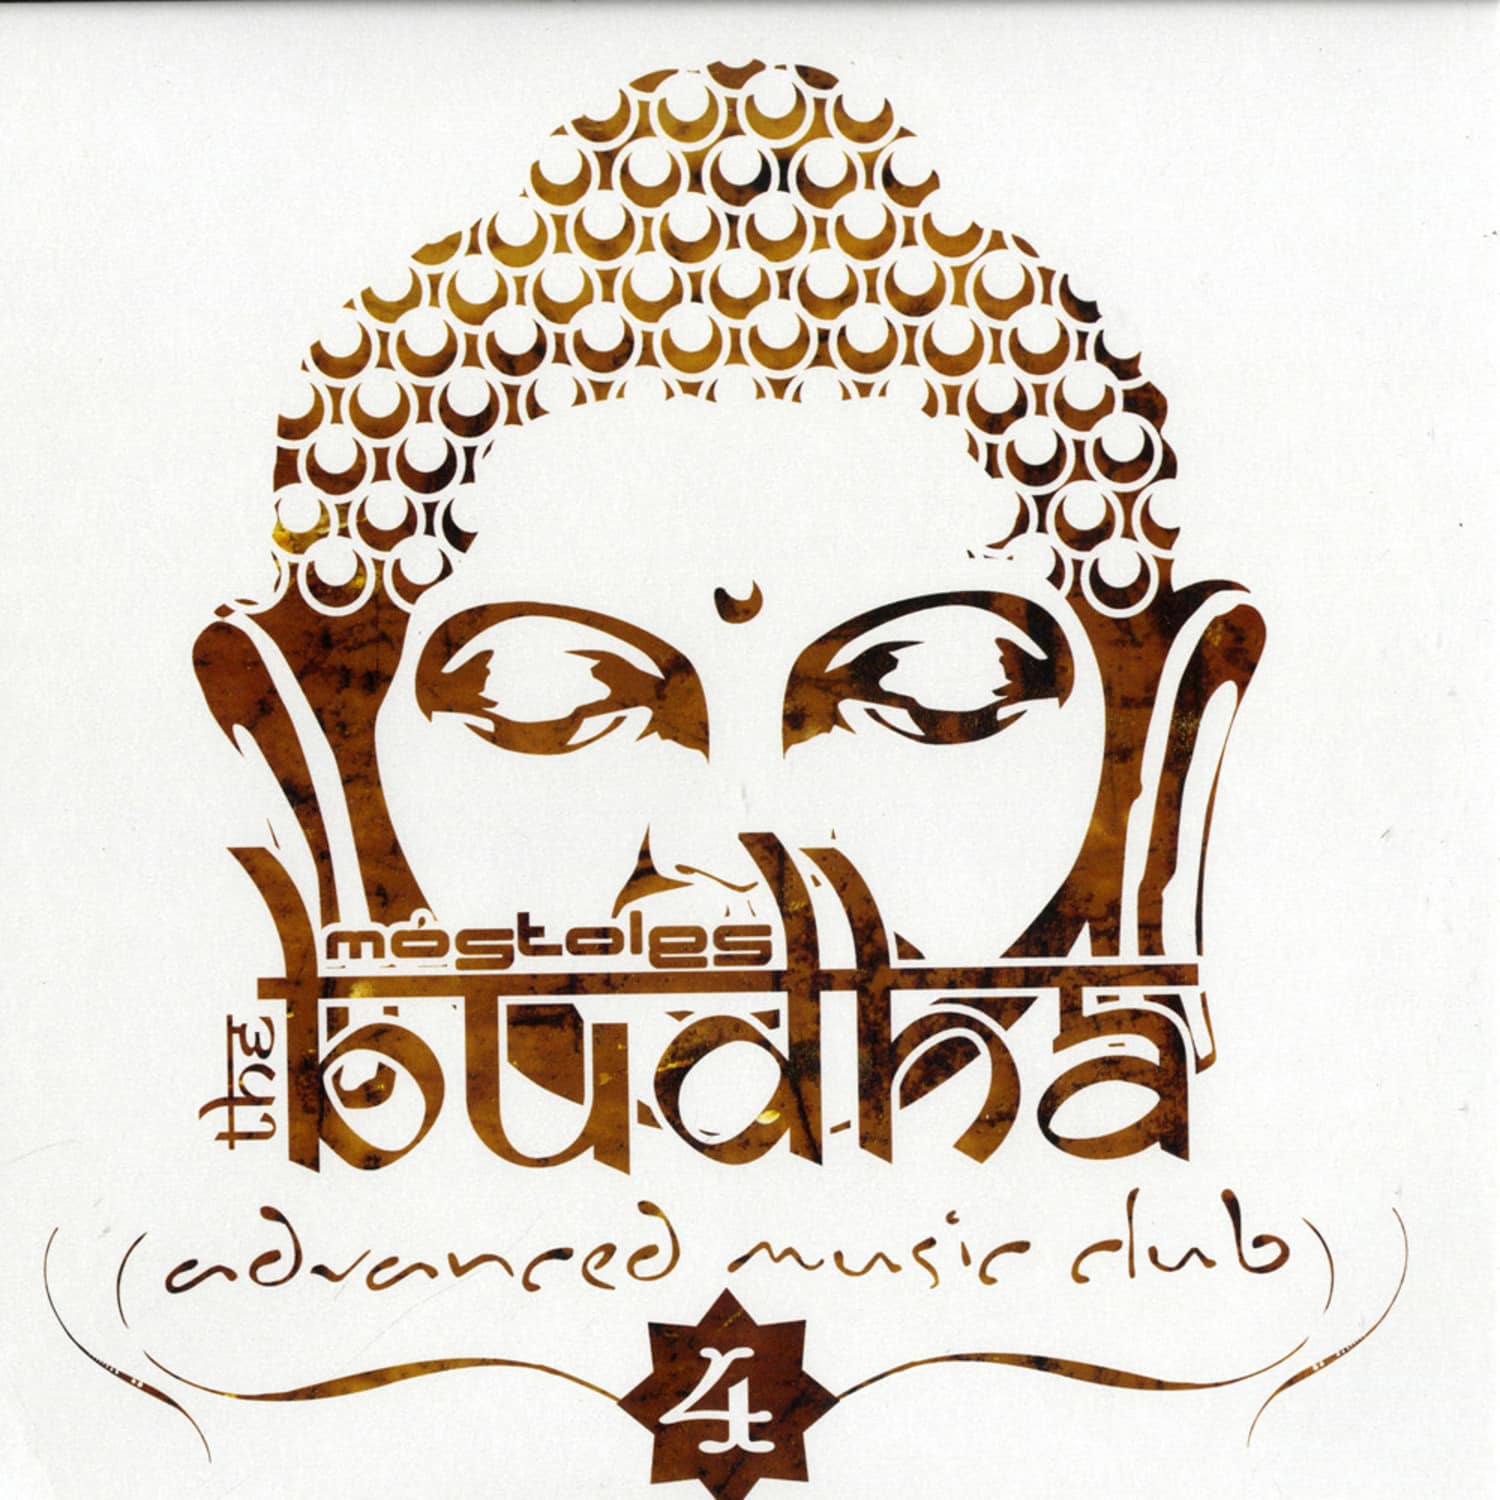 Mostoles Buddha - ADVANCED MUSIC CLUB